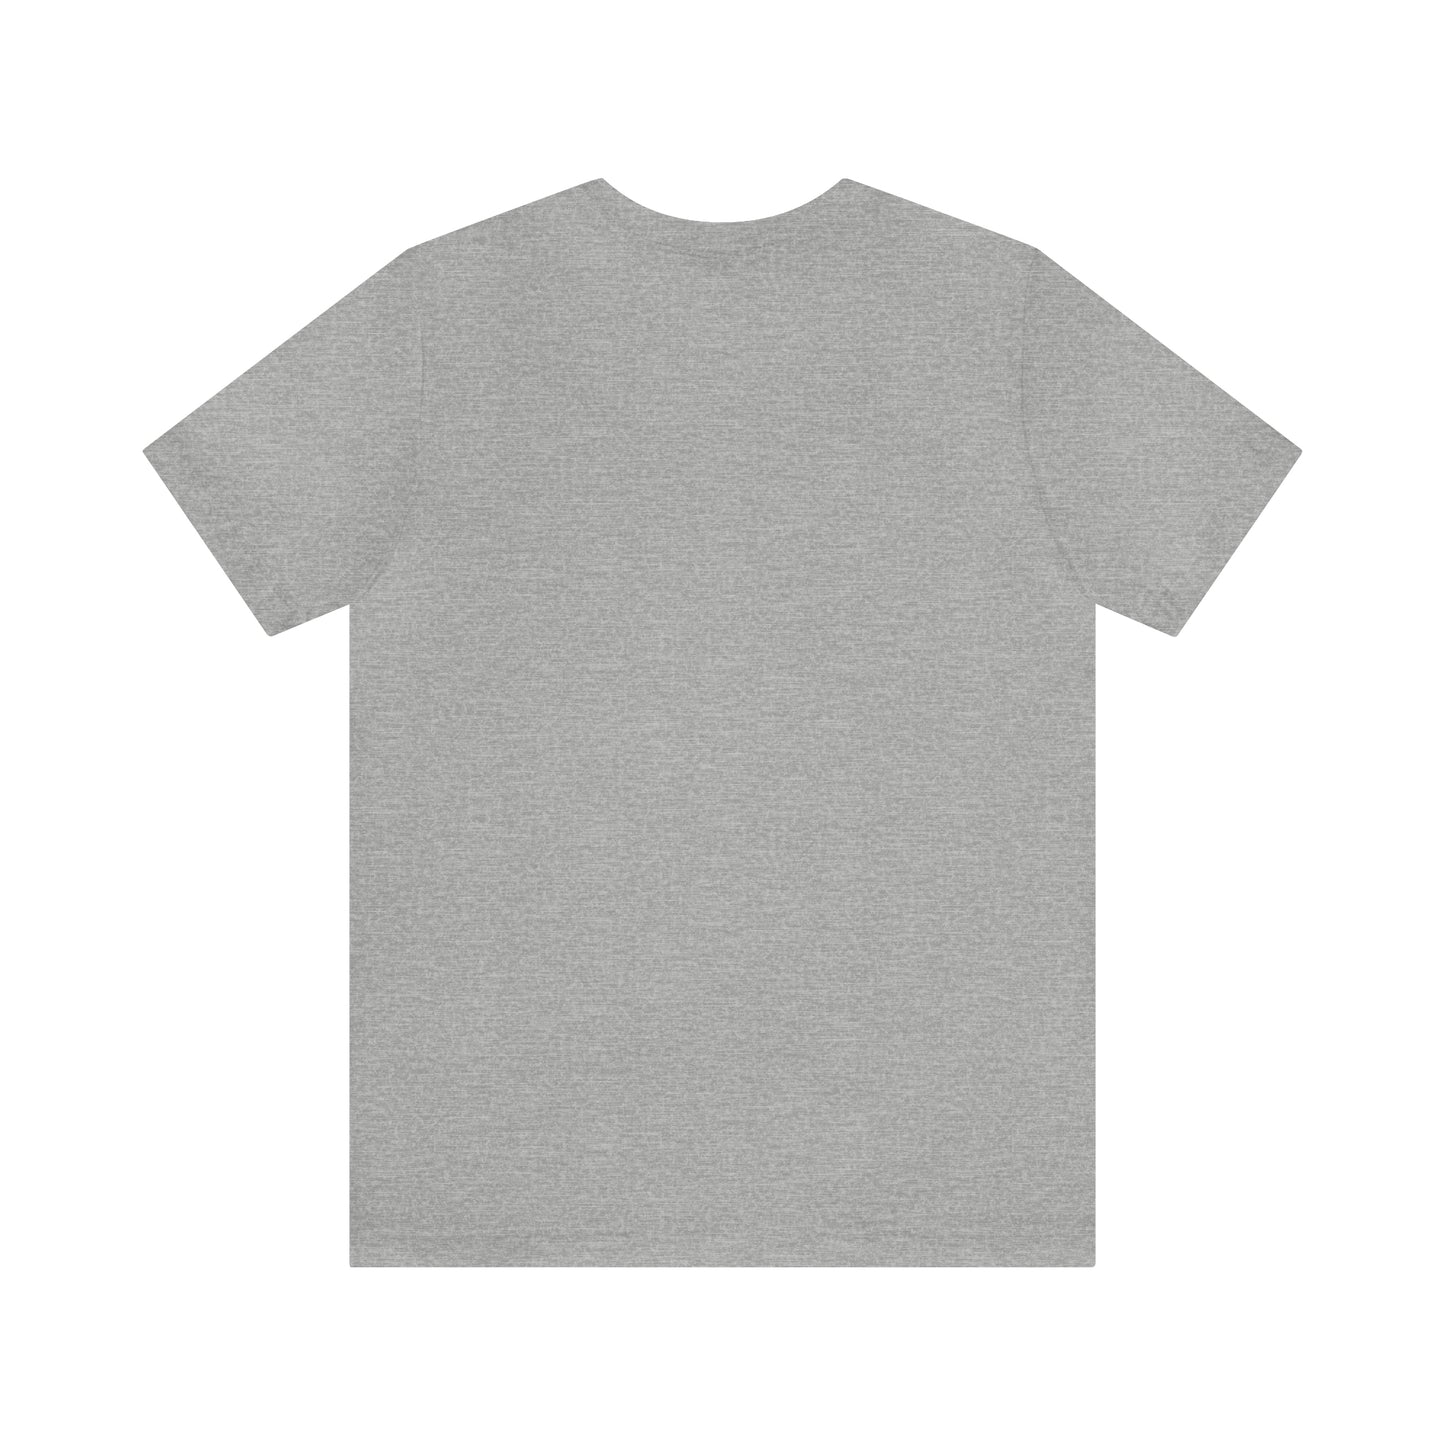 Django Reinhardt Smoking Grey T-Shirt